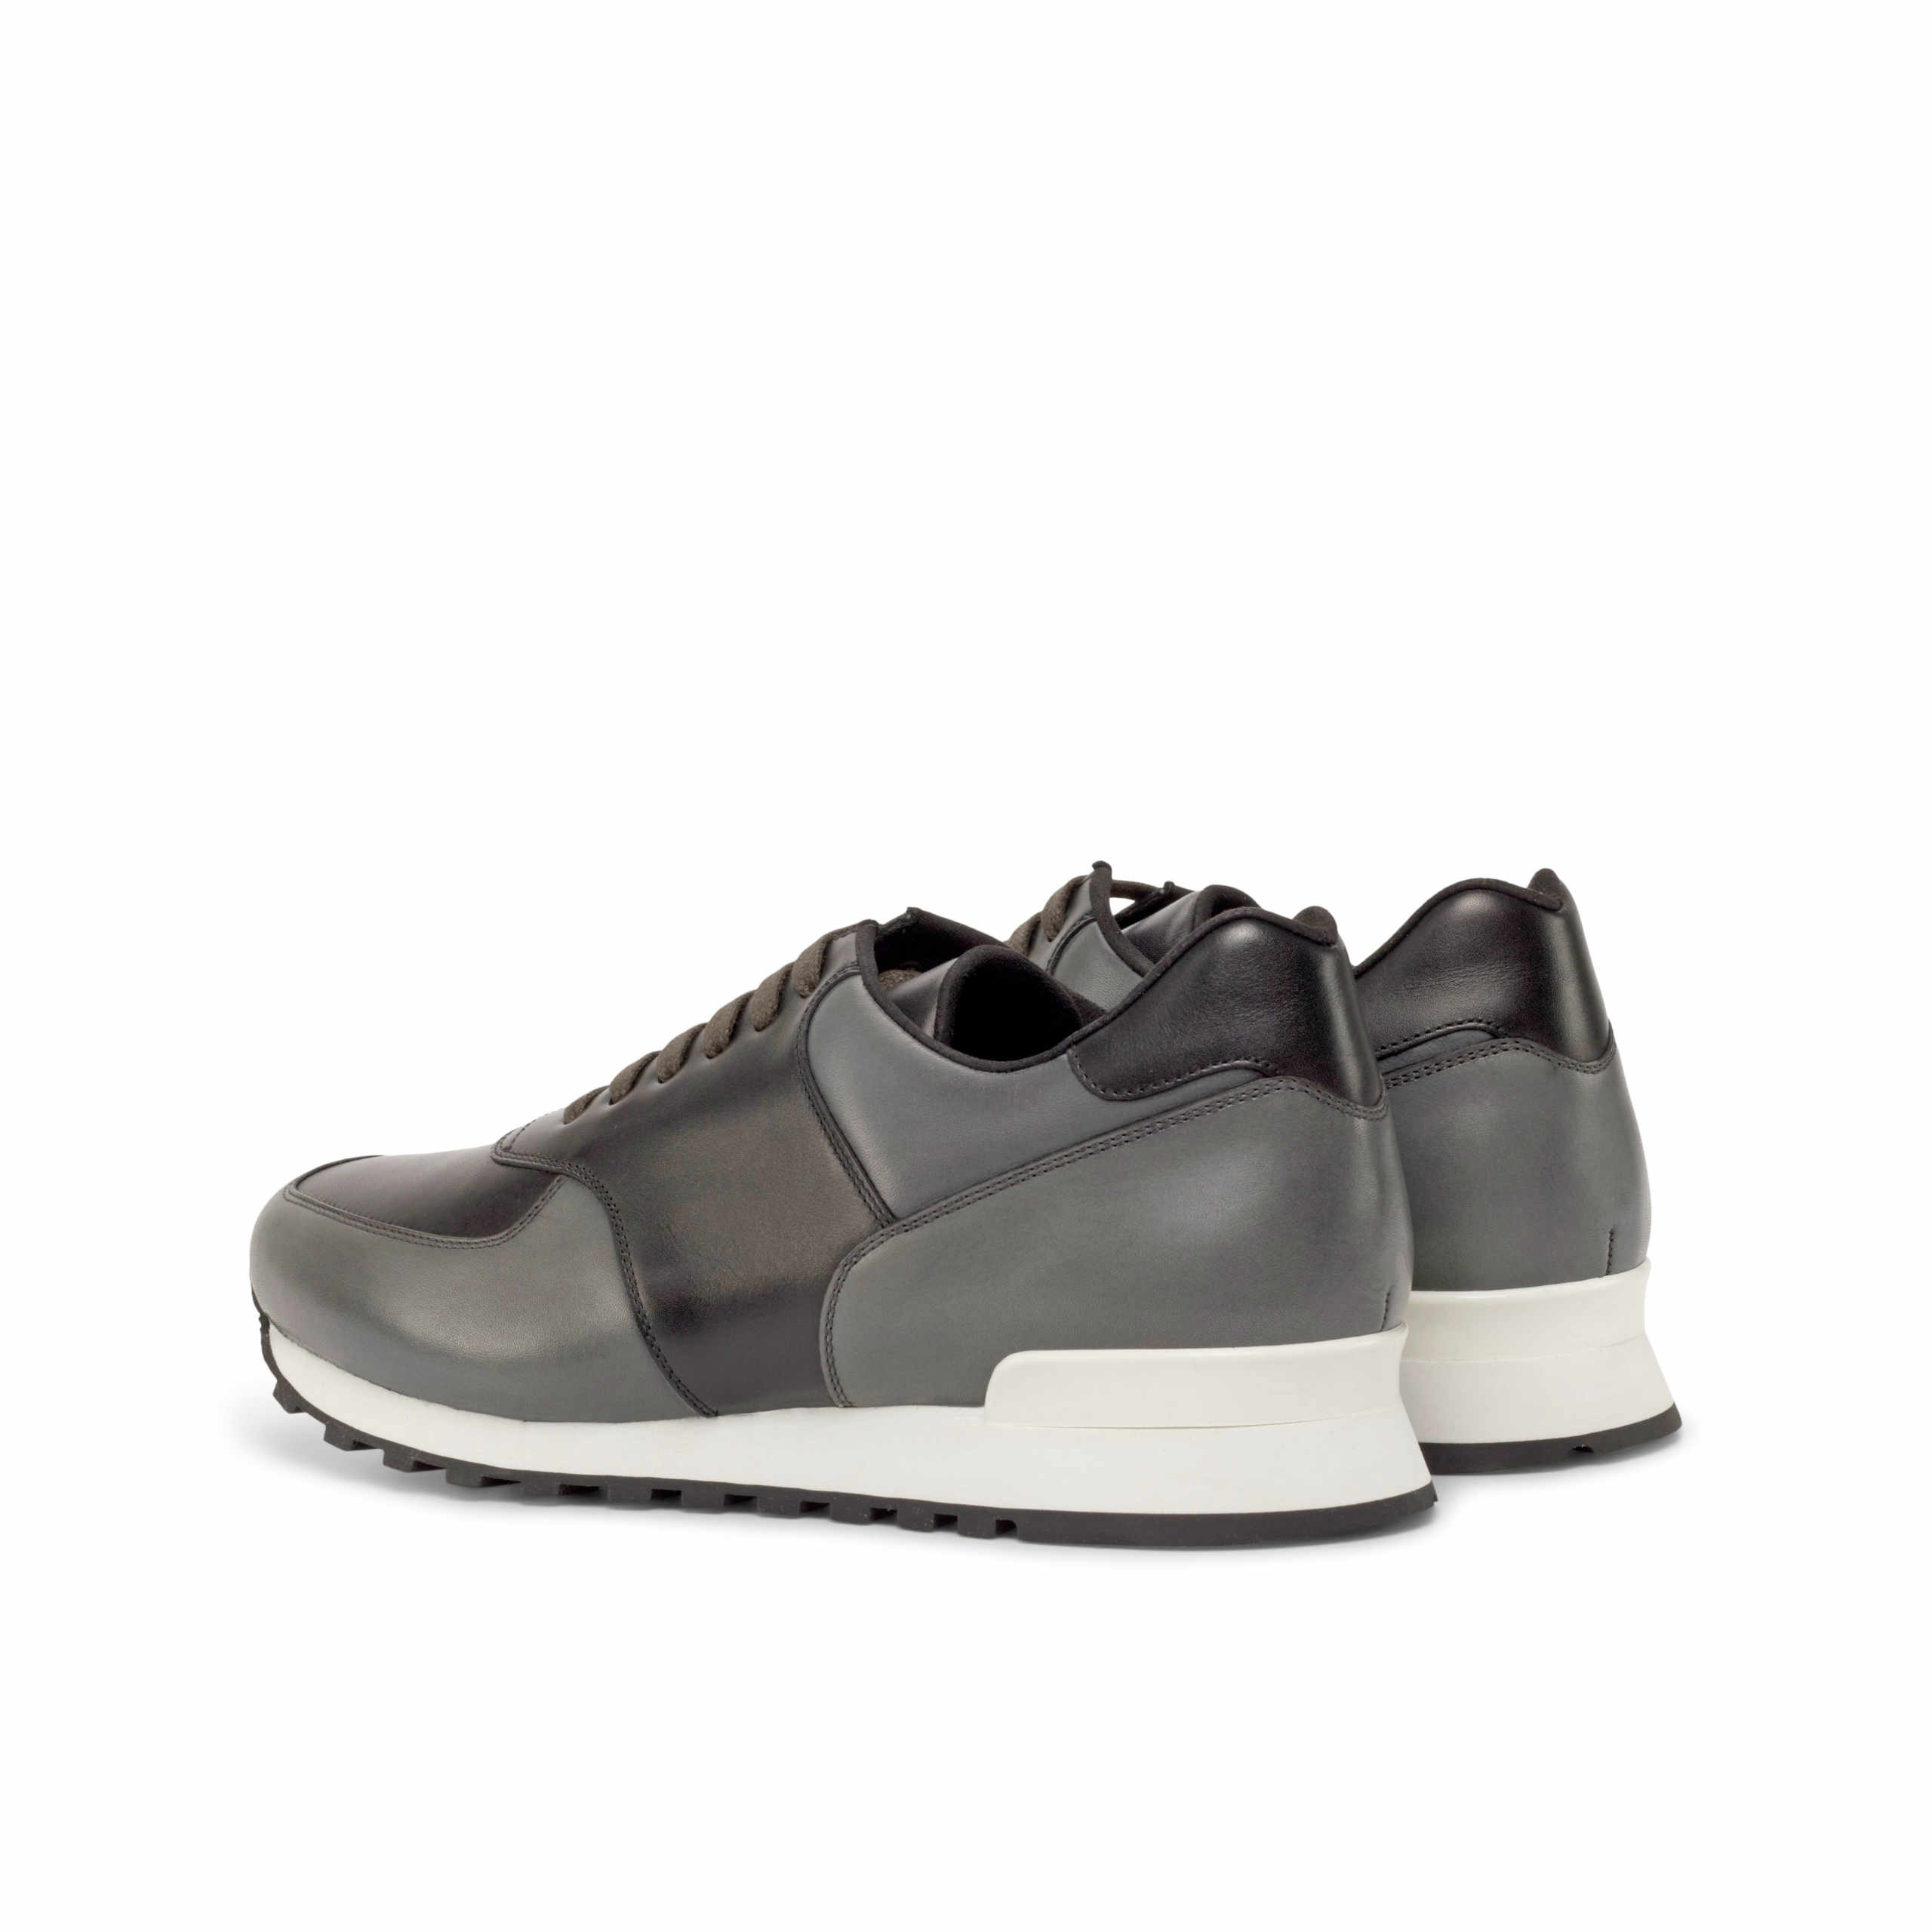 Jogger Sneaker in black box calf leather ➡️ 100% Handmade